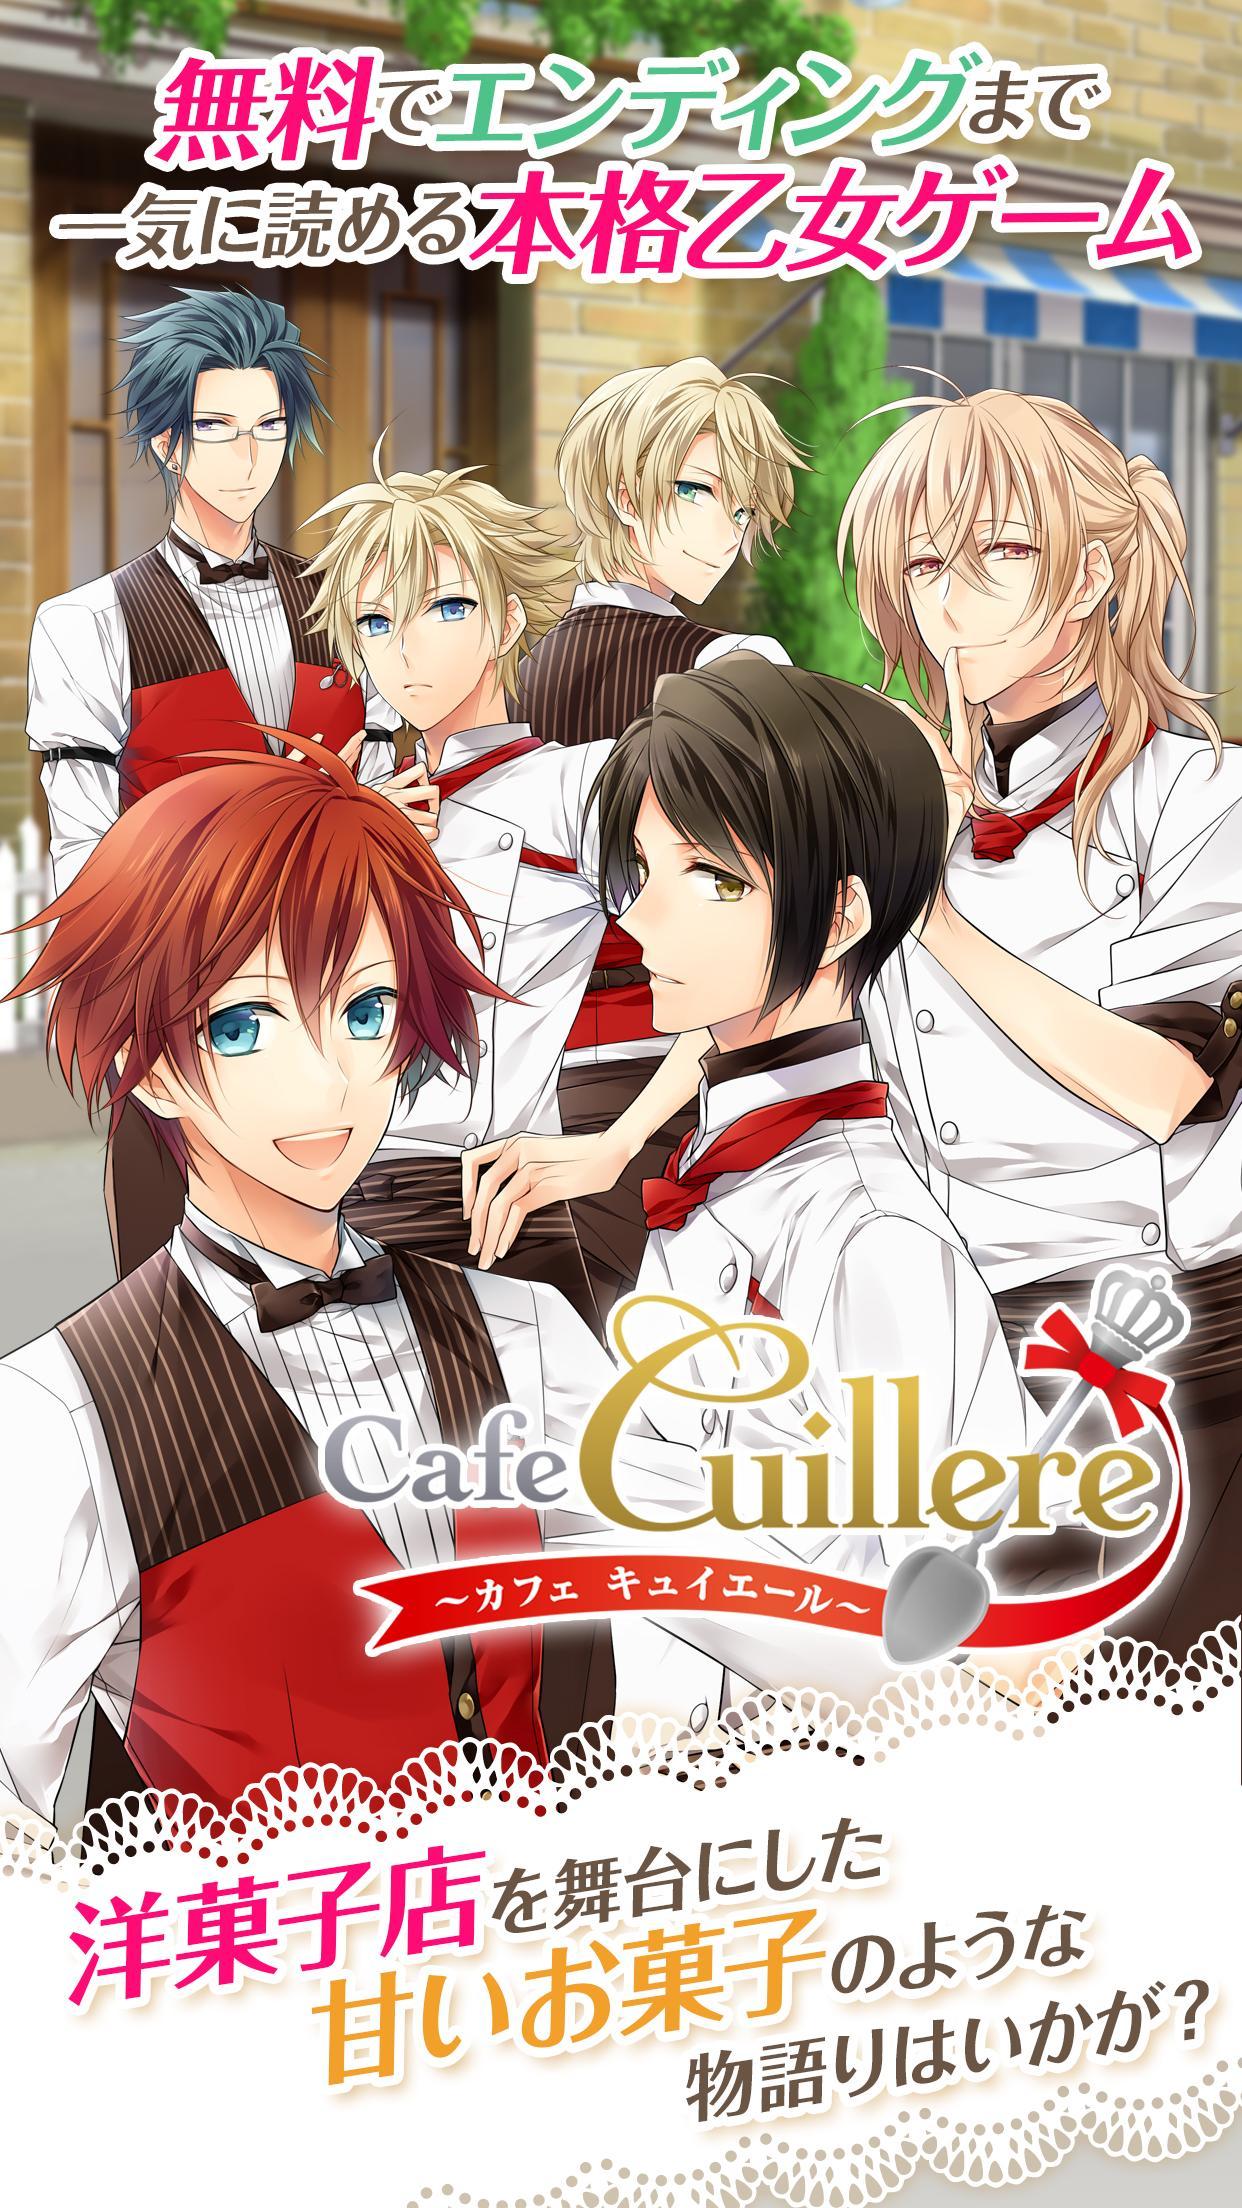 Screenshot 1 of Café Cuillere 1.0.5